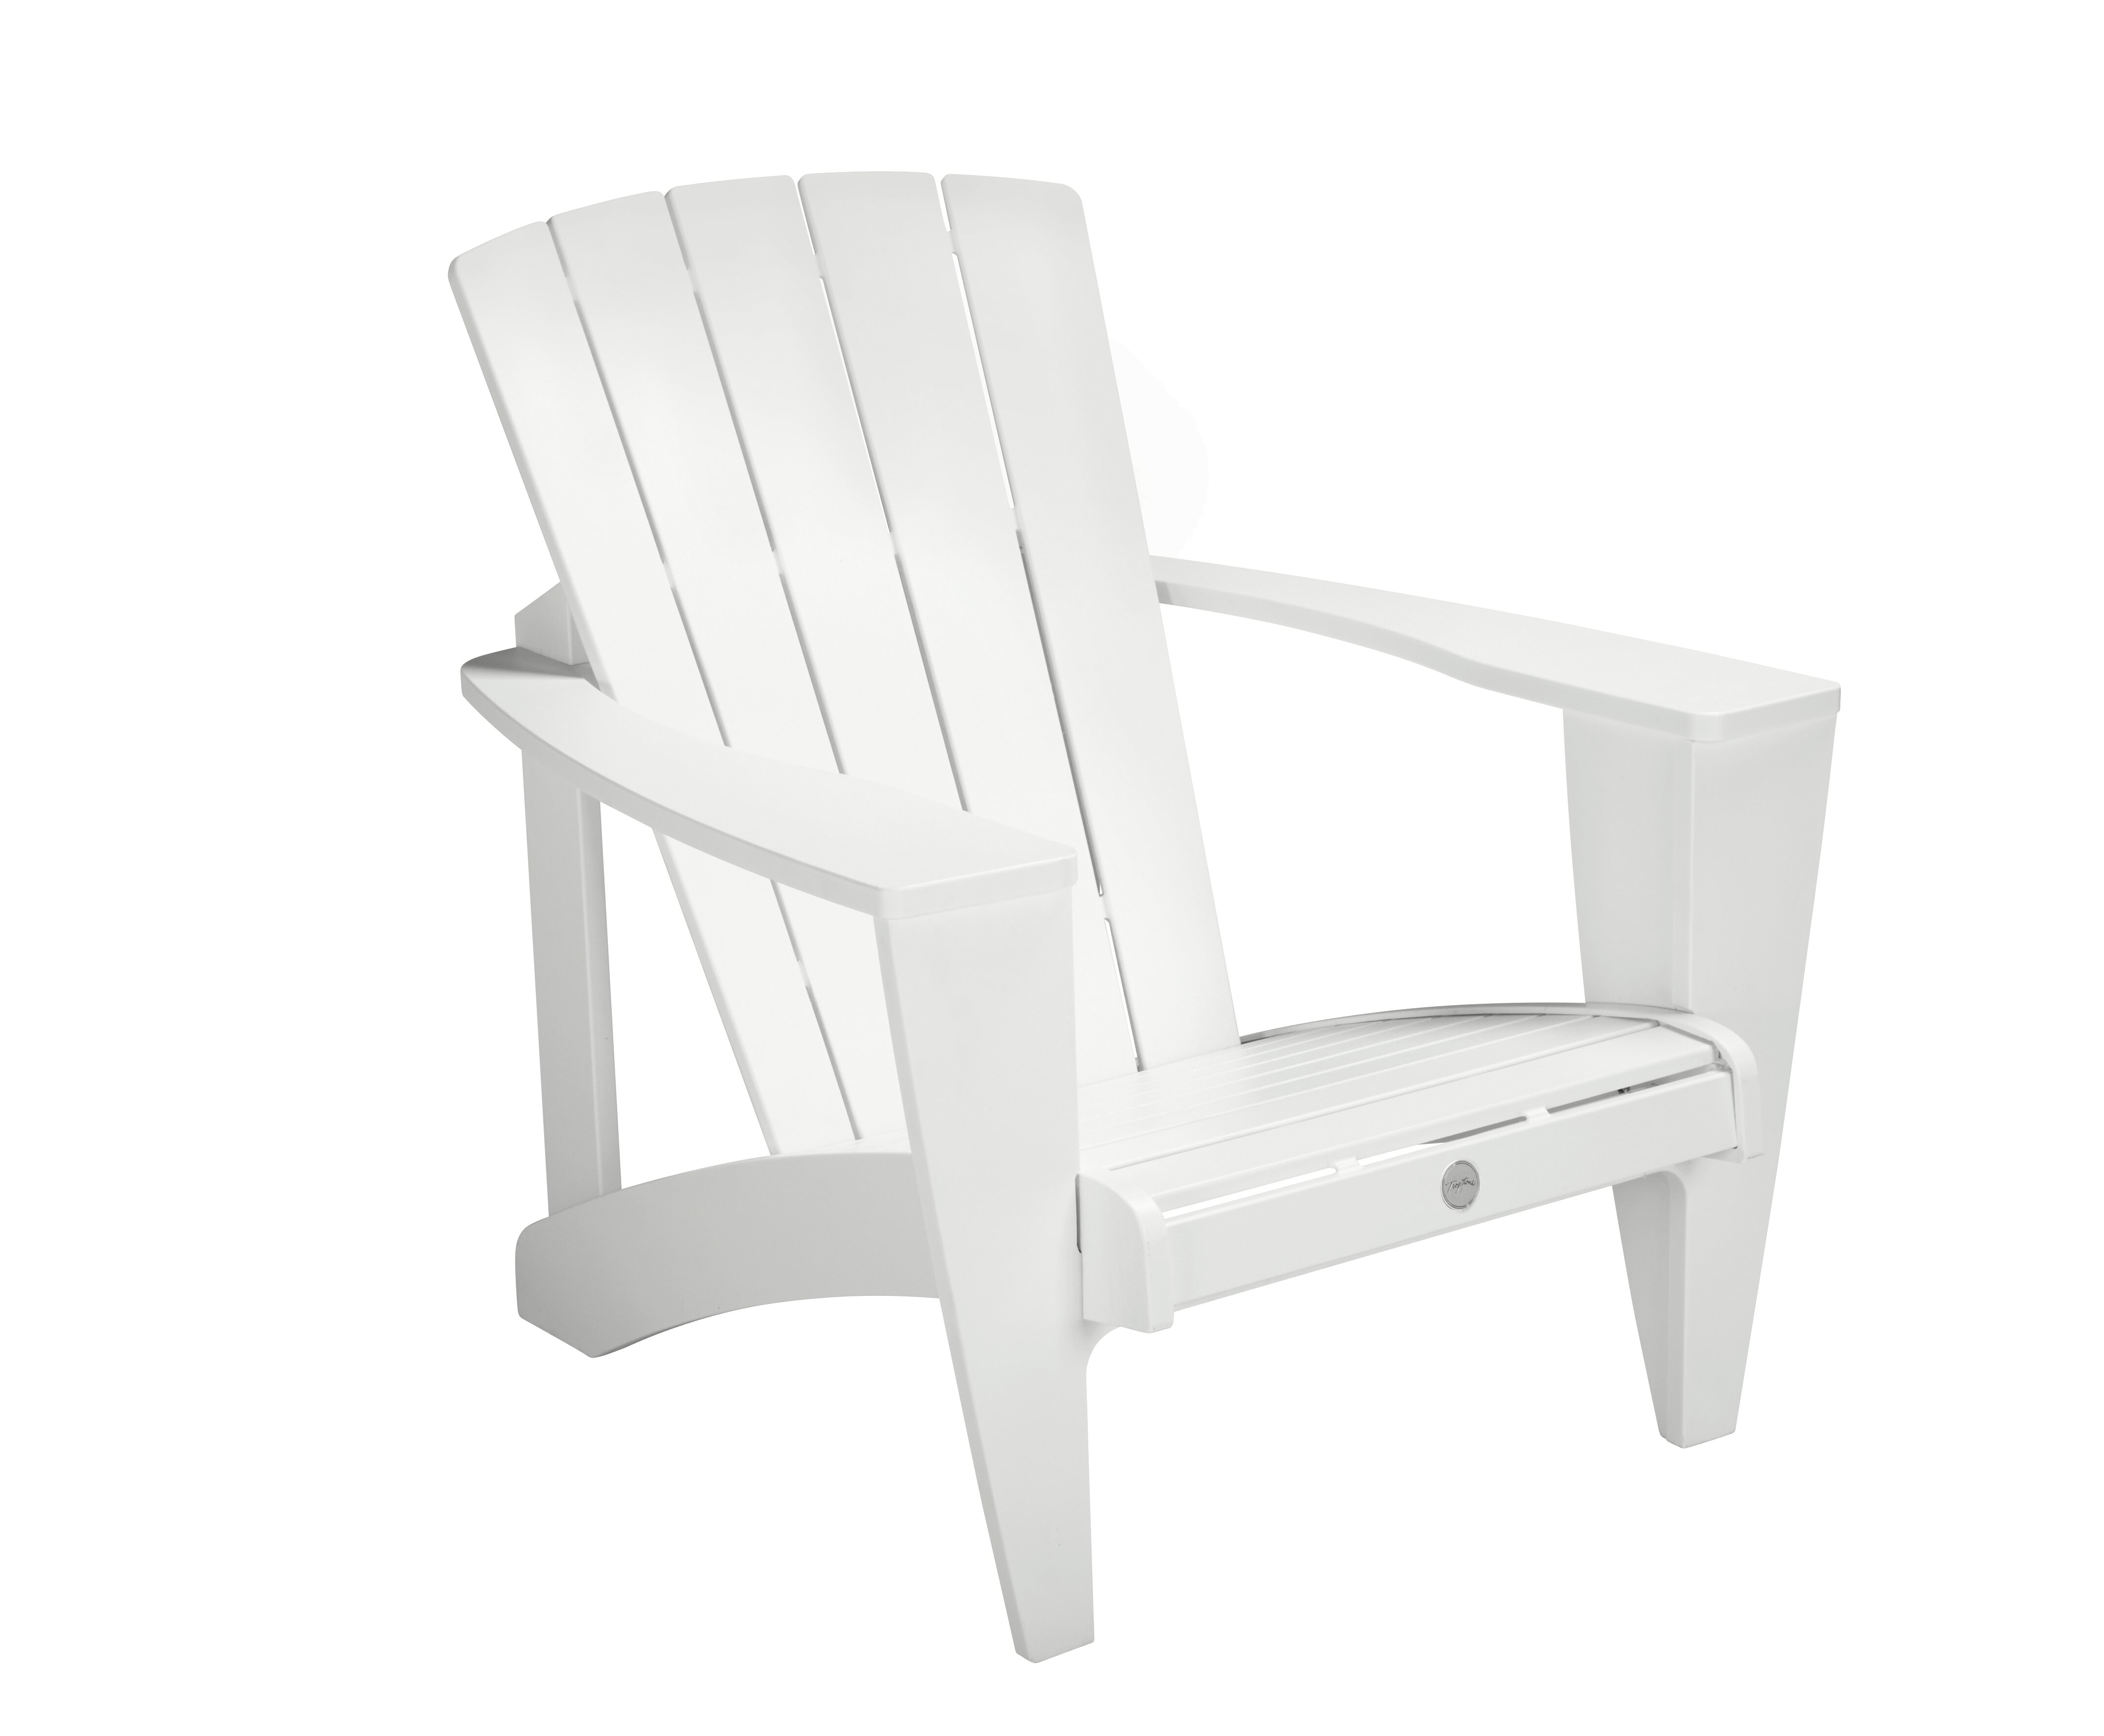 Curve Plasticresin Adirondack Chair with regard to measurements 4292 X 3542